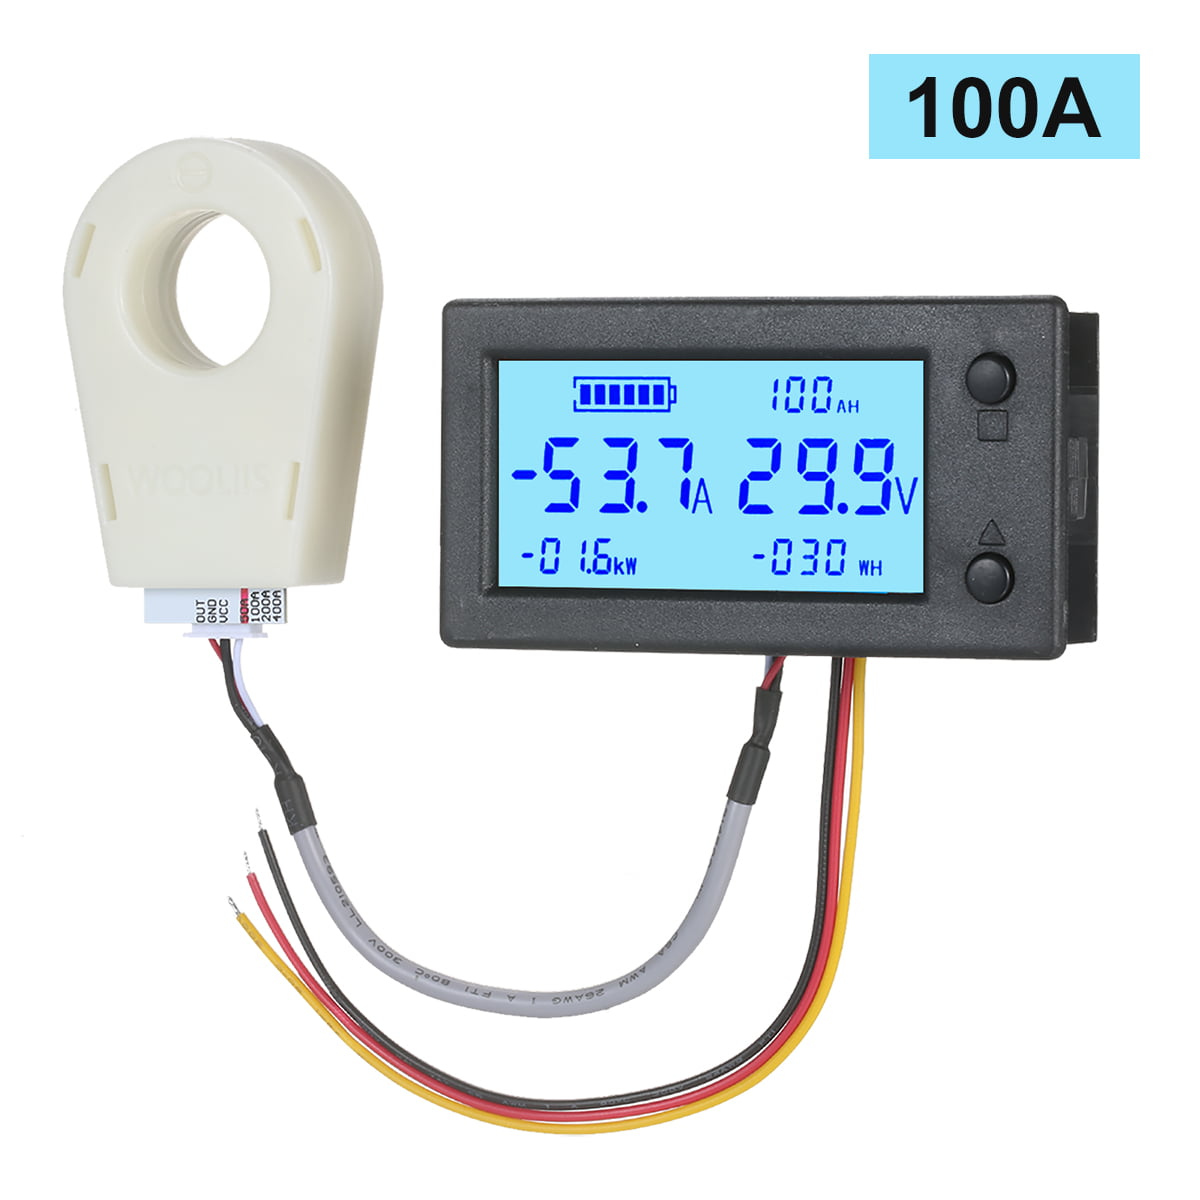 Solar Battery Monitor DC 0-200V 0-200A Volt AMP Watt Amper-Hour Timer 999AH Car 